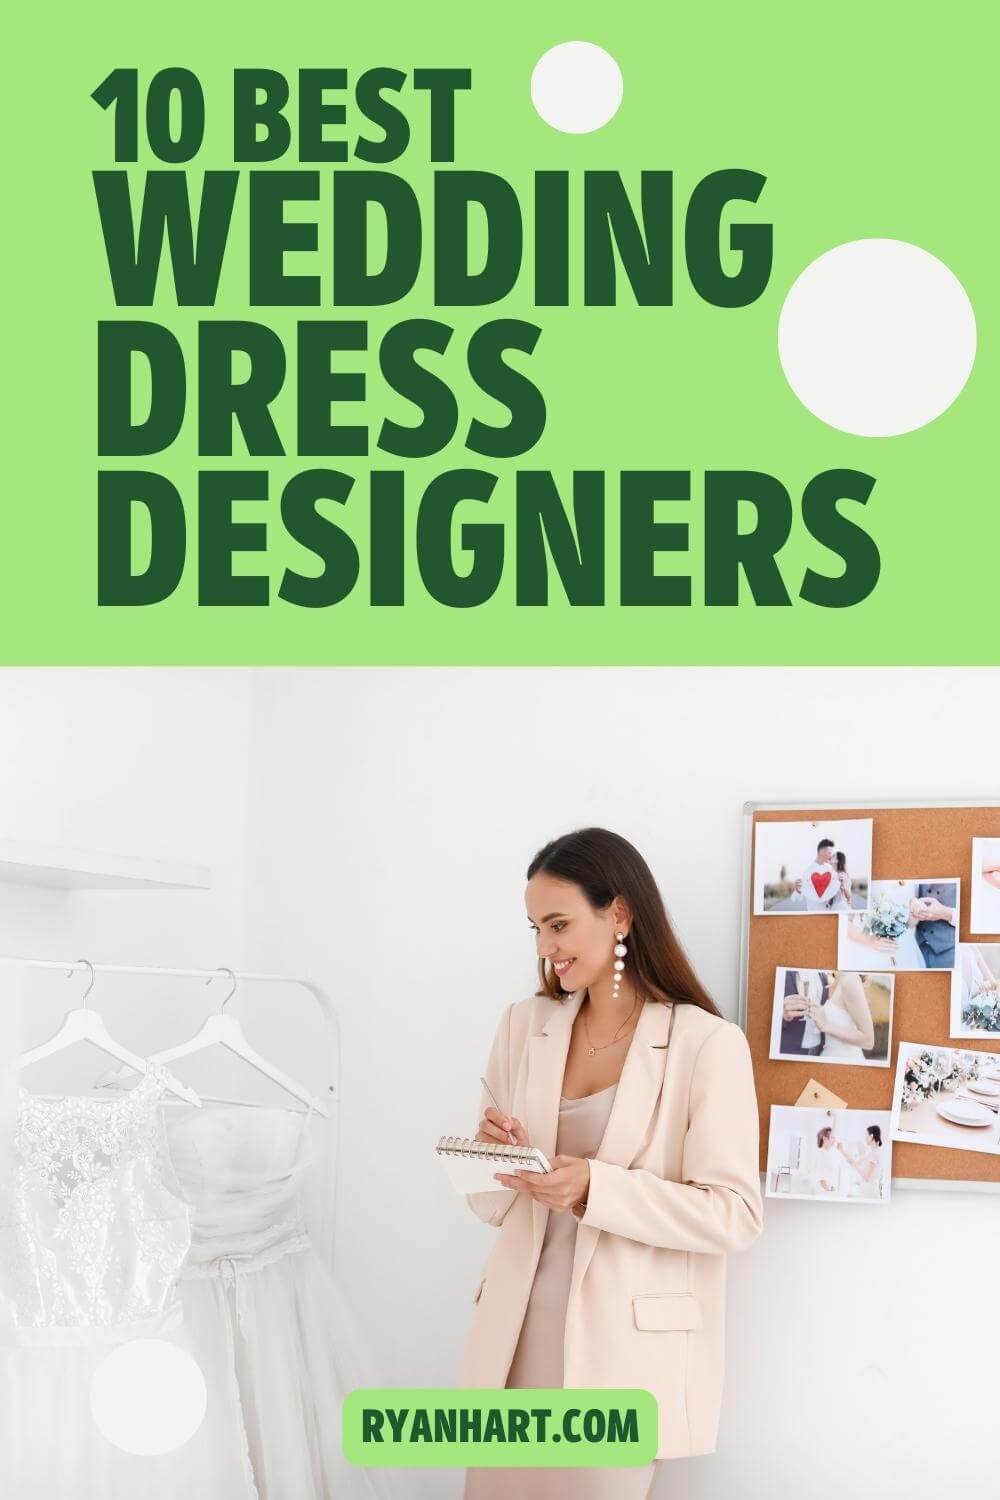 Designer looking at wedding dress designs